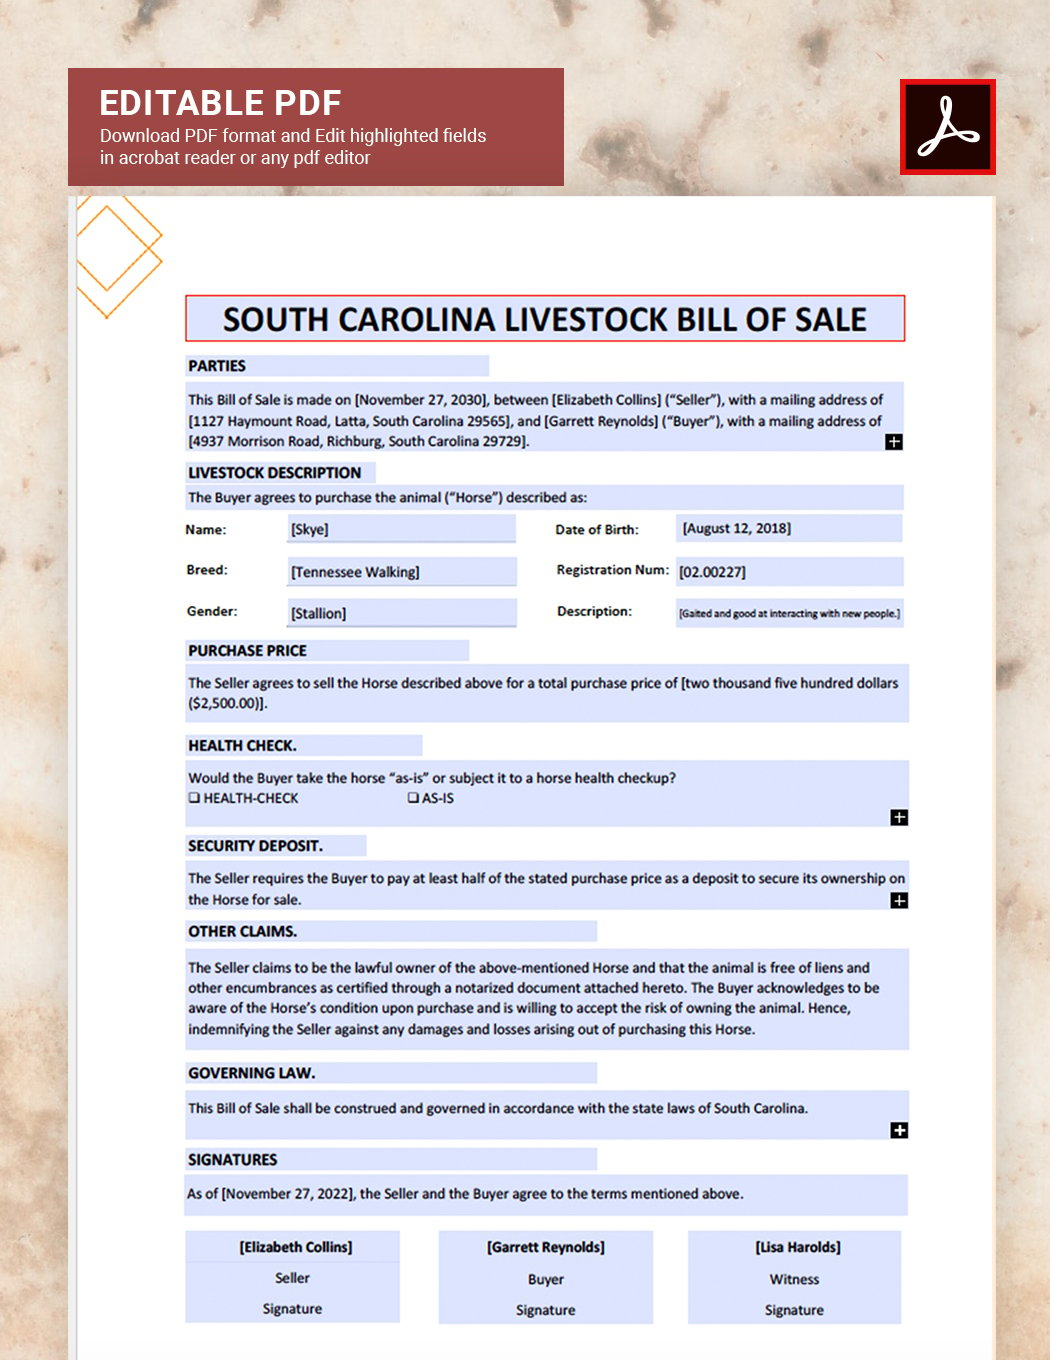 South Carolina Livestock Bill of Sale Template